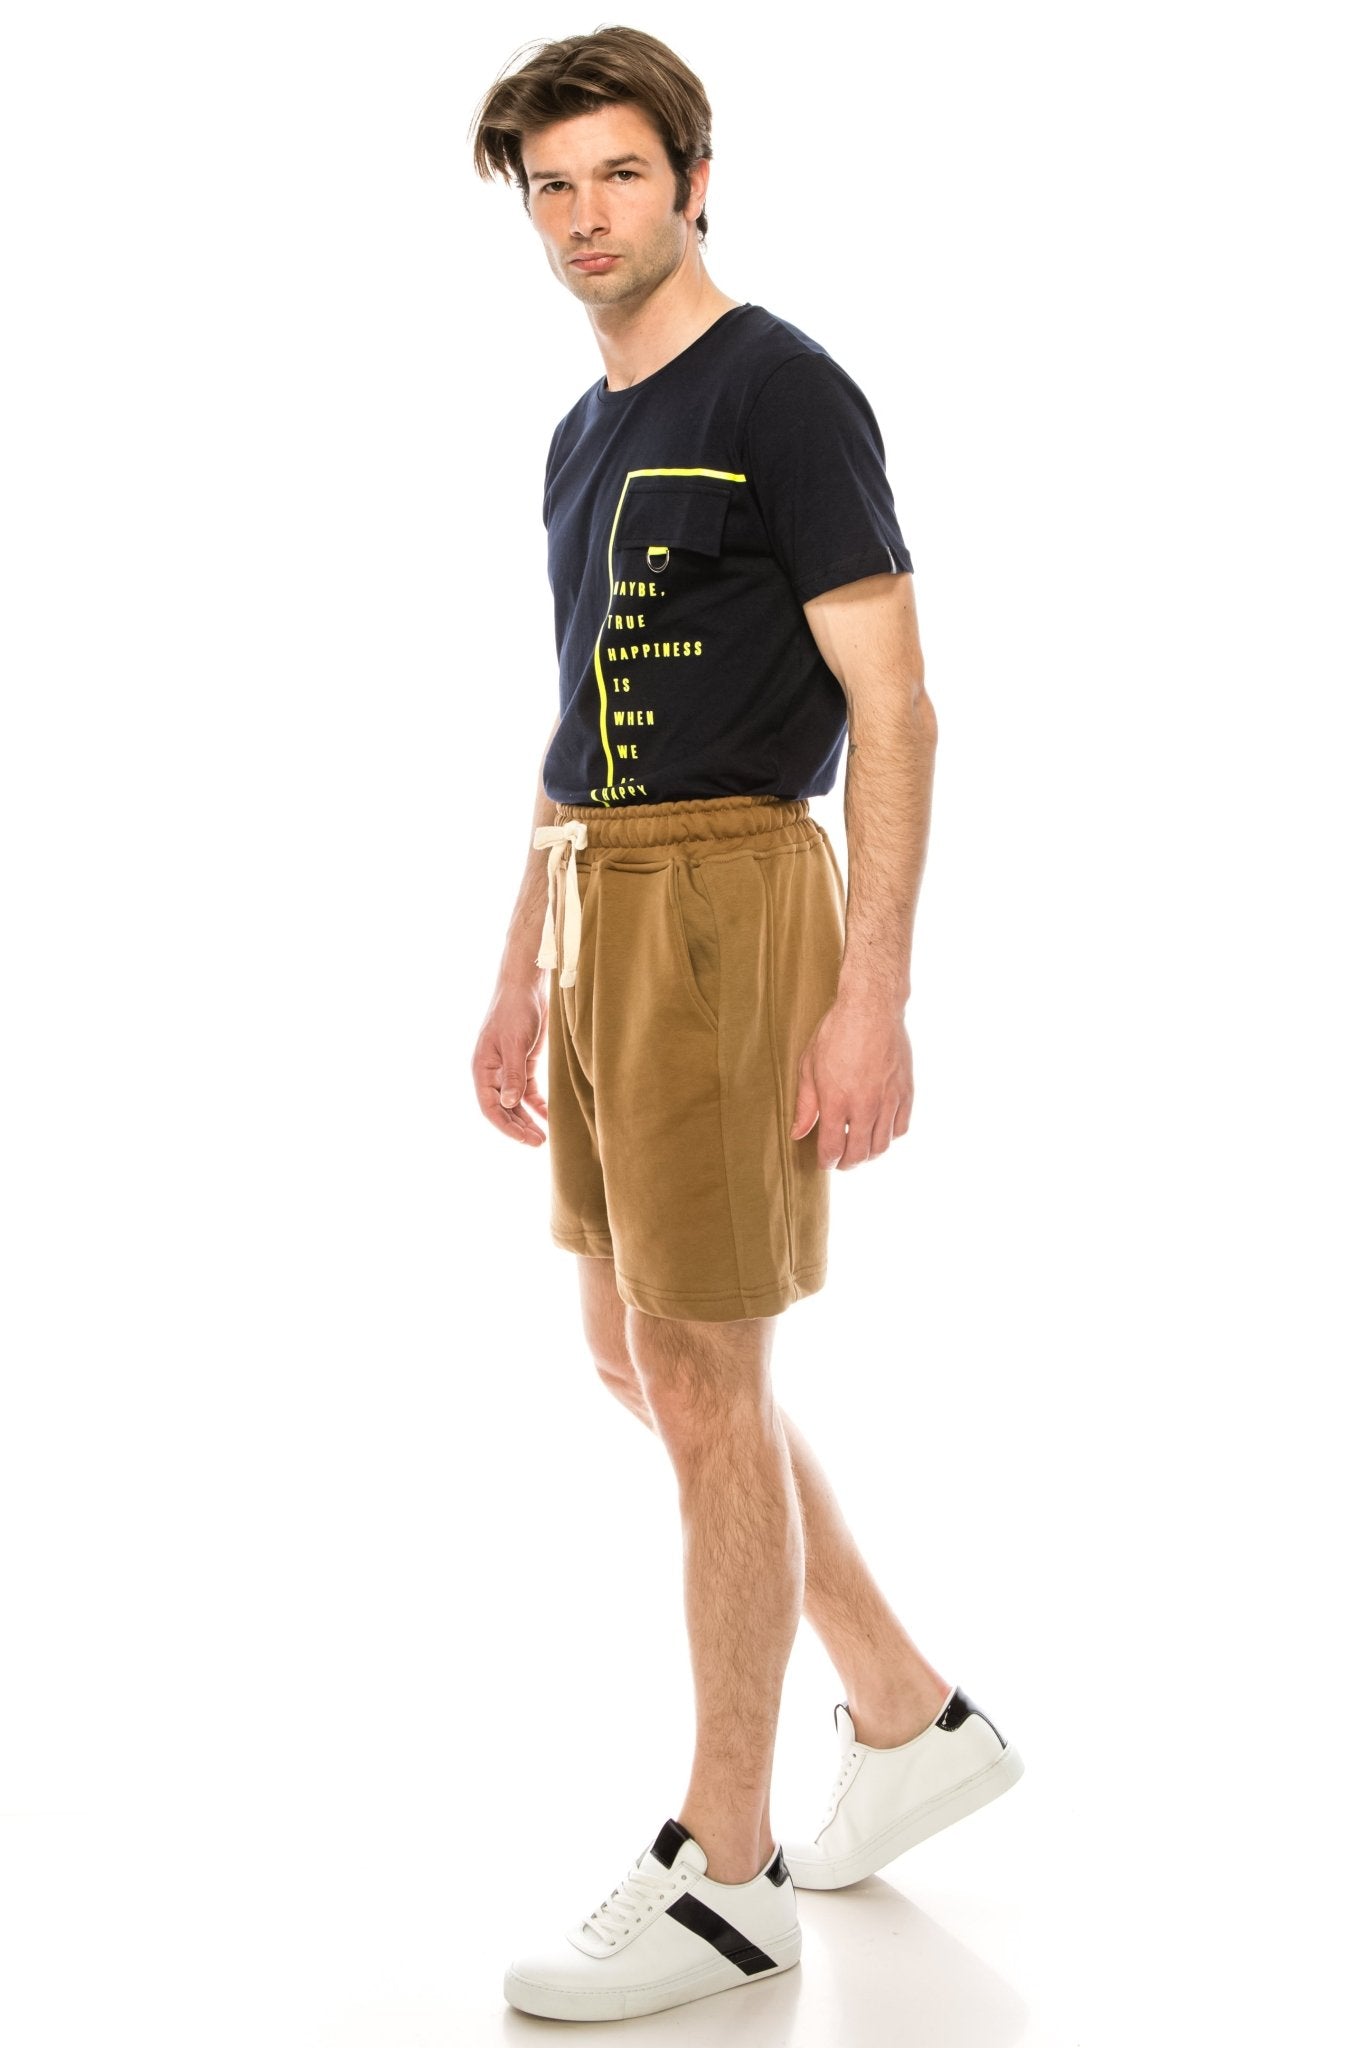 Weekender Cotton Shorts - Light Brown - Ron Tomson